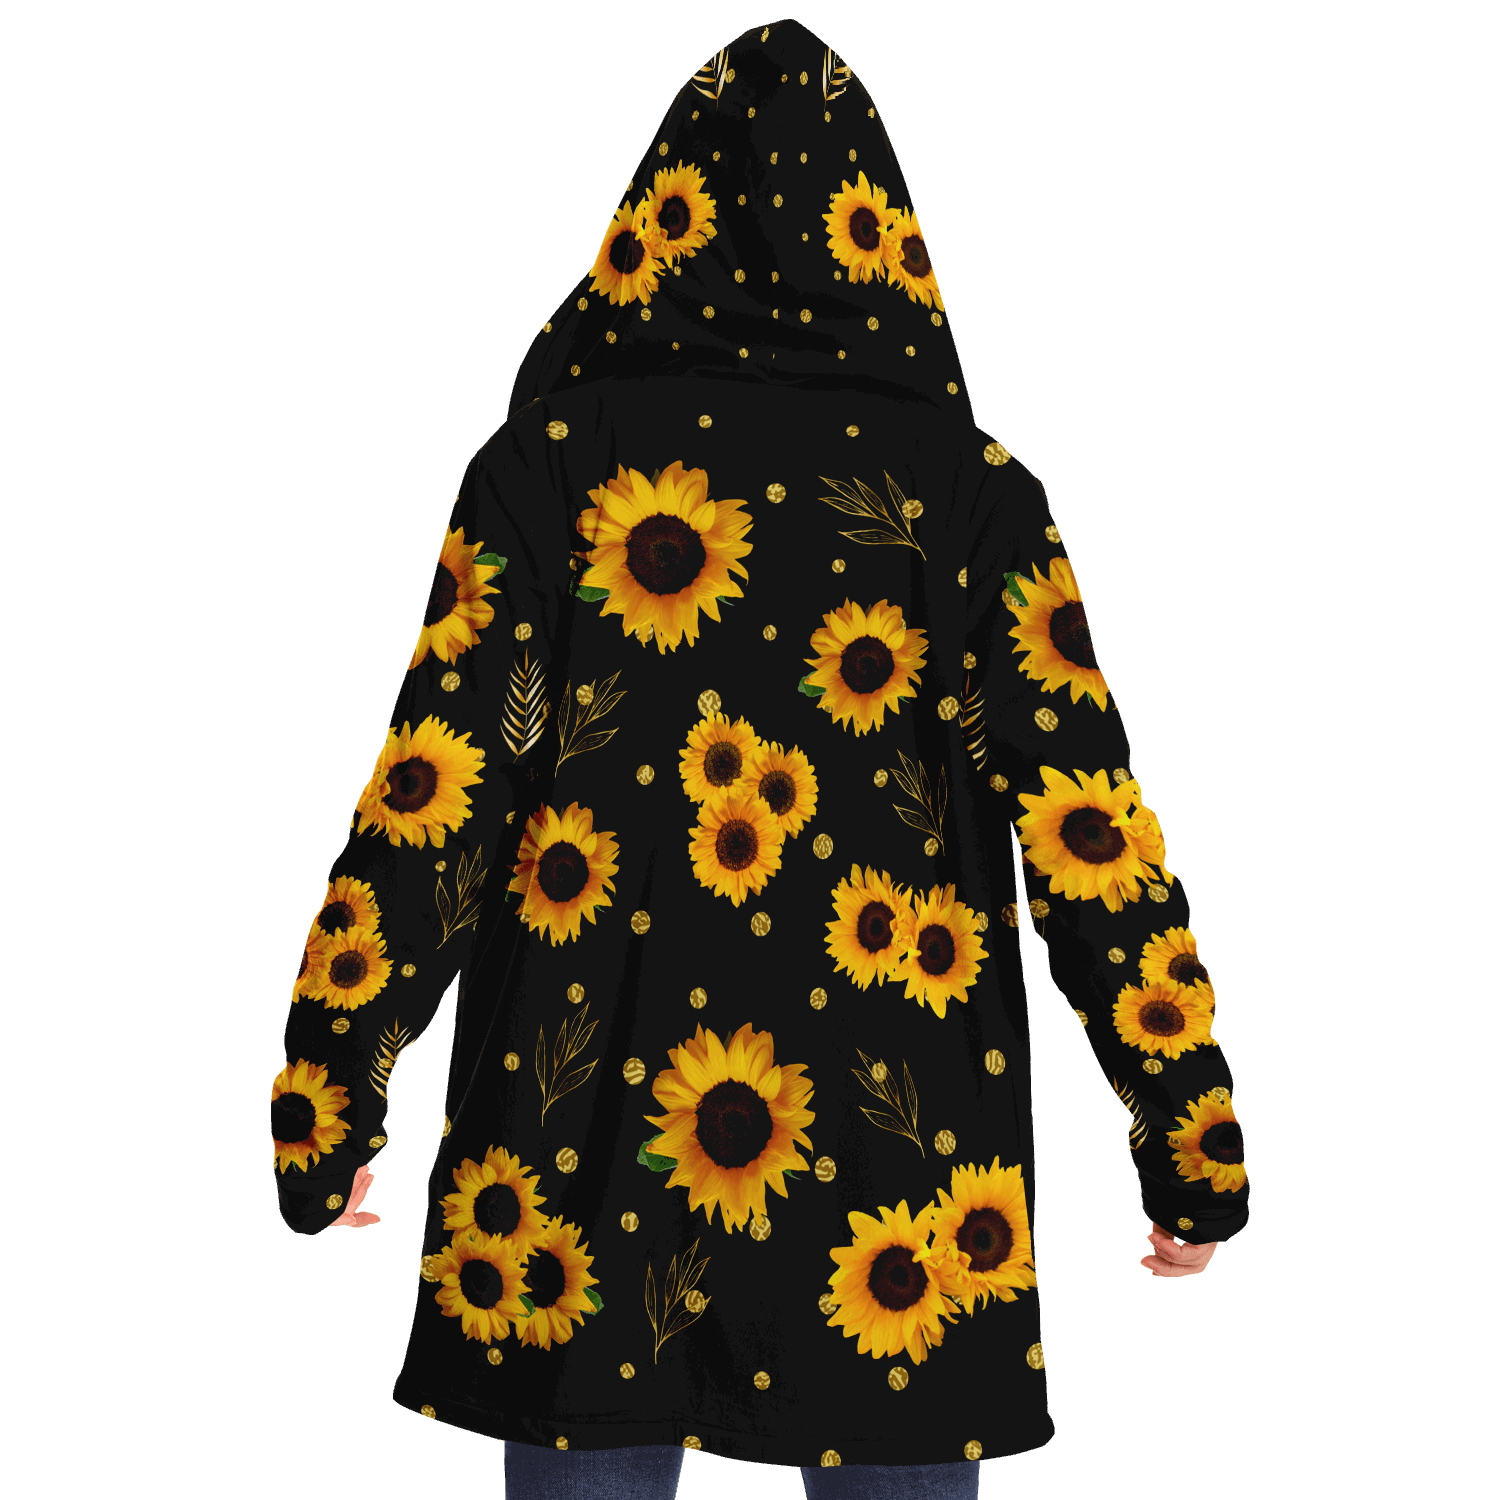 black cloak with sunflowers